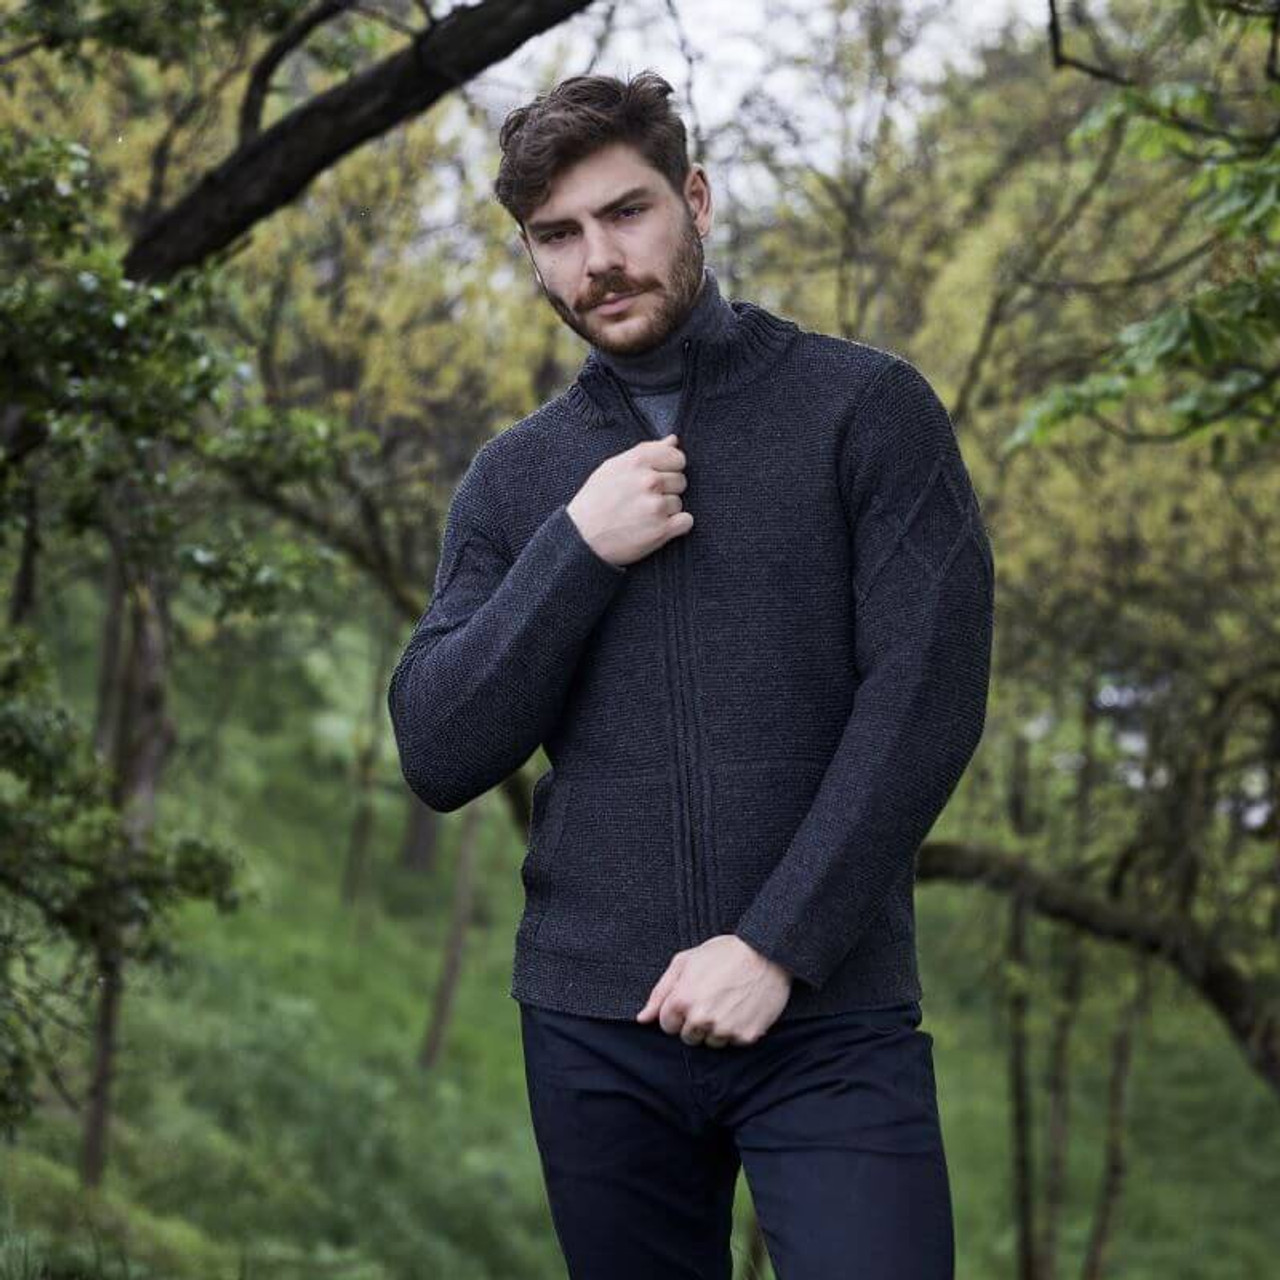 SAOL Aran Irish Fisherman Sweater Men's 100% Merino Wool Cable Knit Pullover